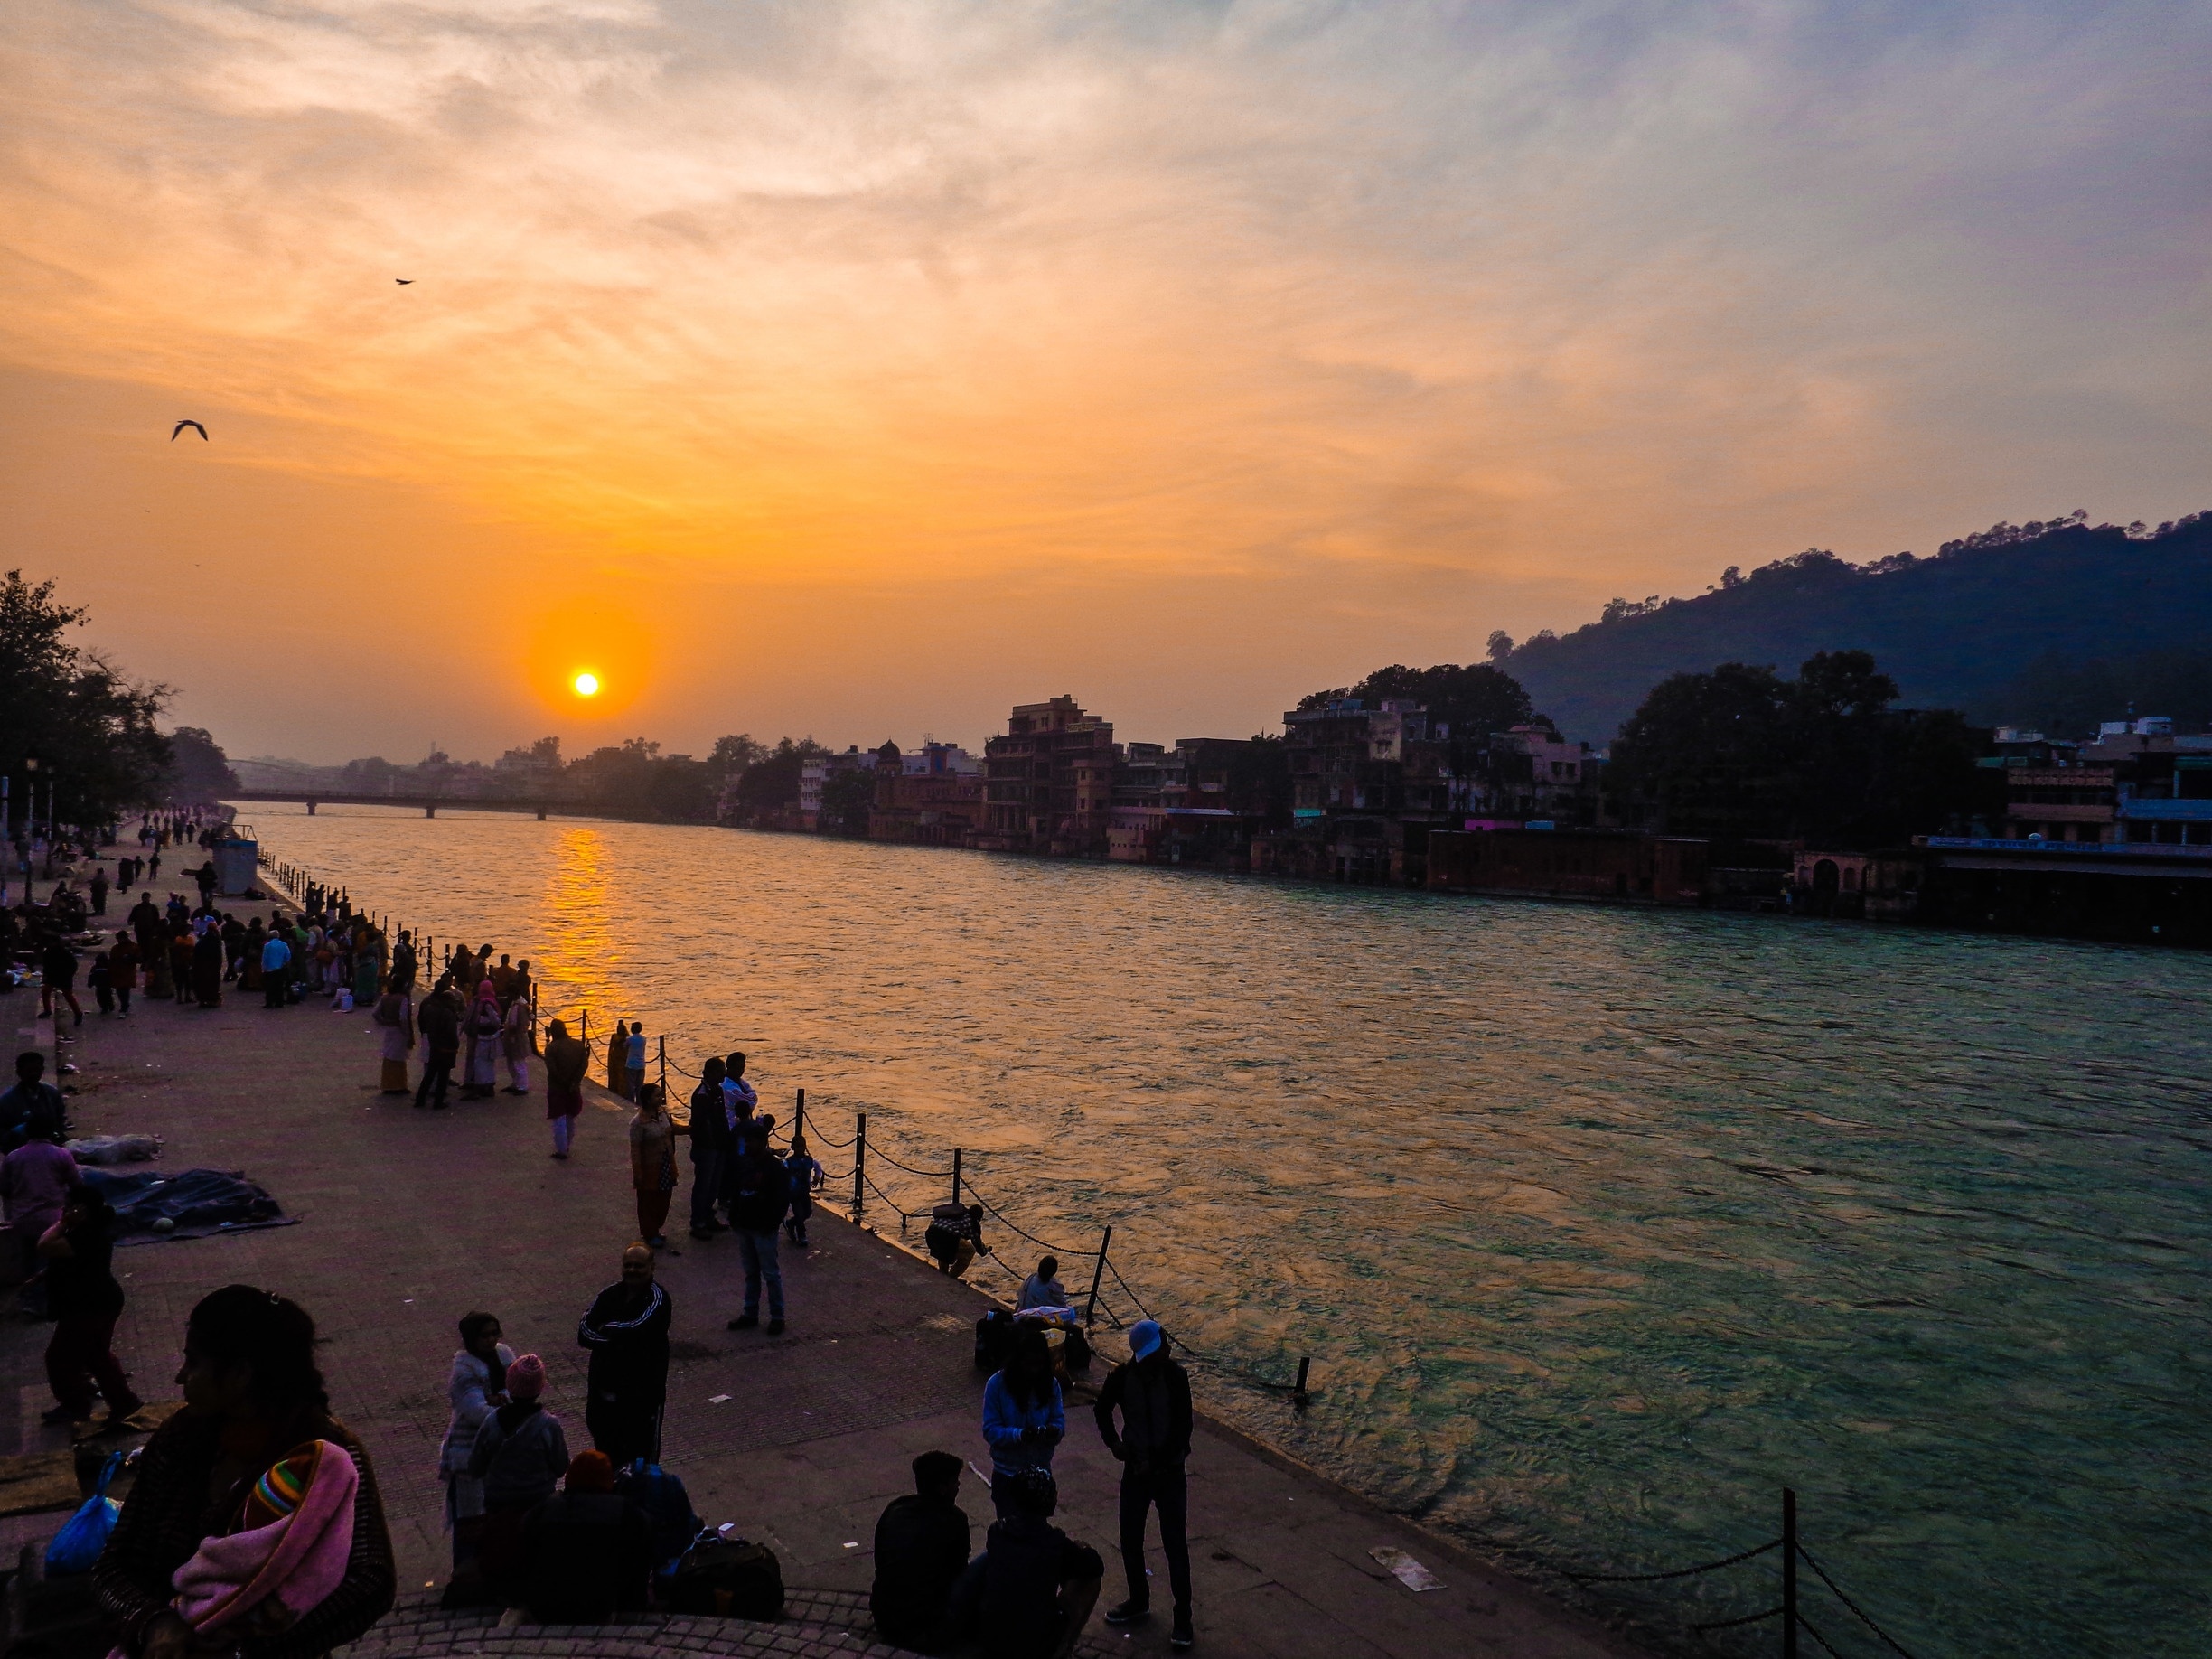 A crowded Har ki Pauri ghaat, Haridwar, India during the golden hour.
#BVStrove